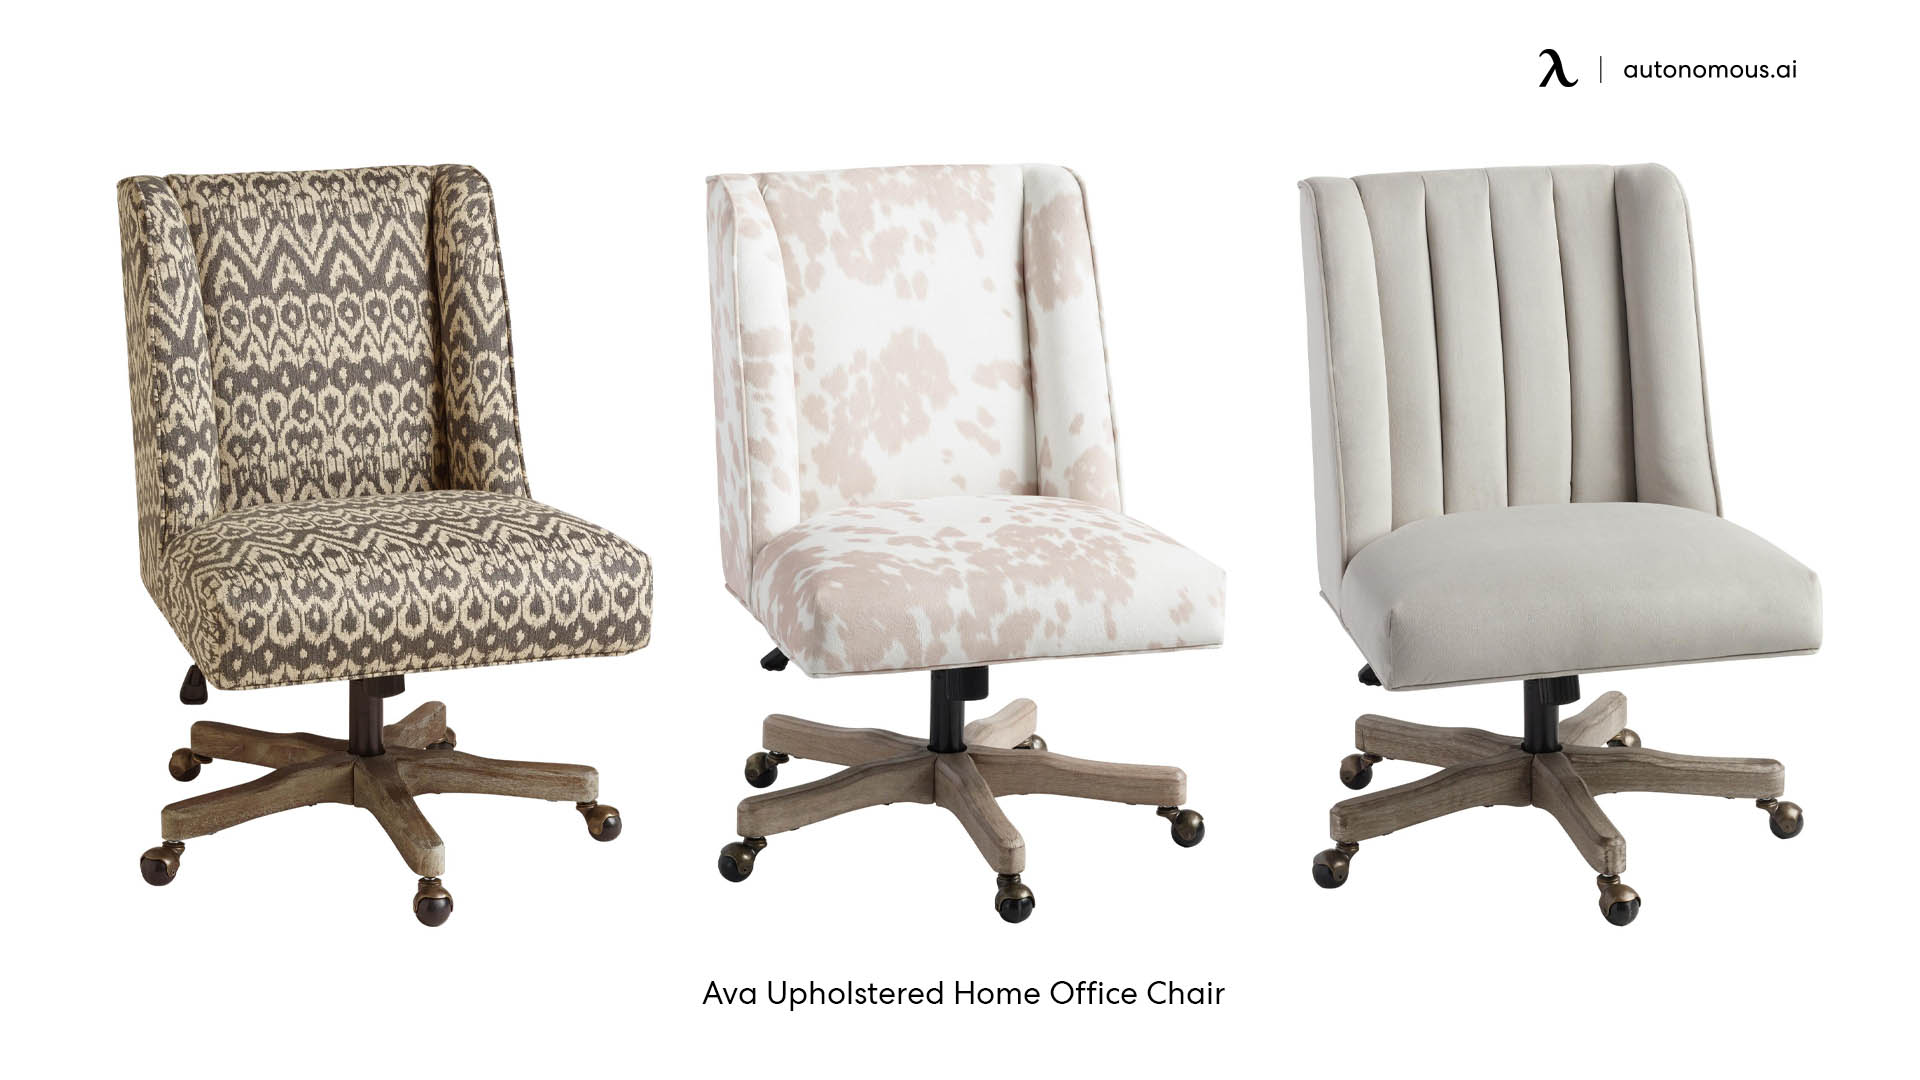 Ava Upholstered Home Office Chair